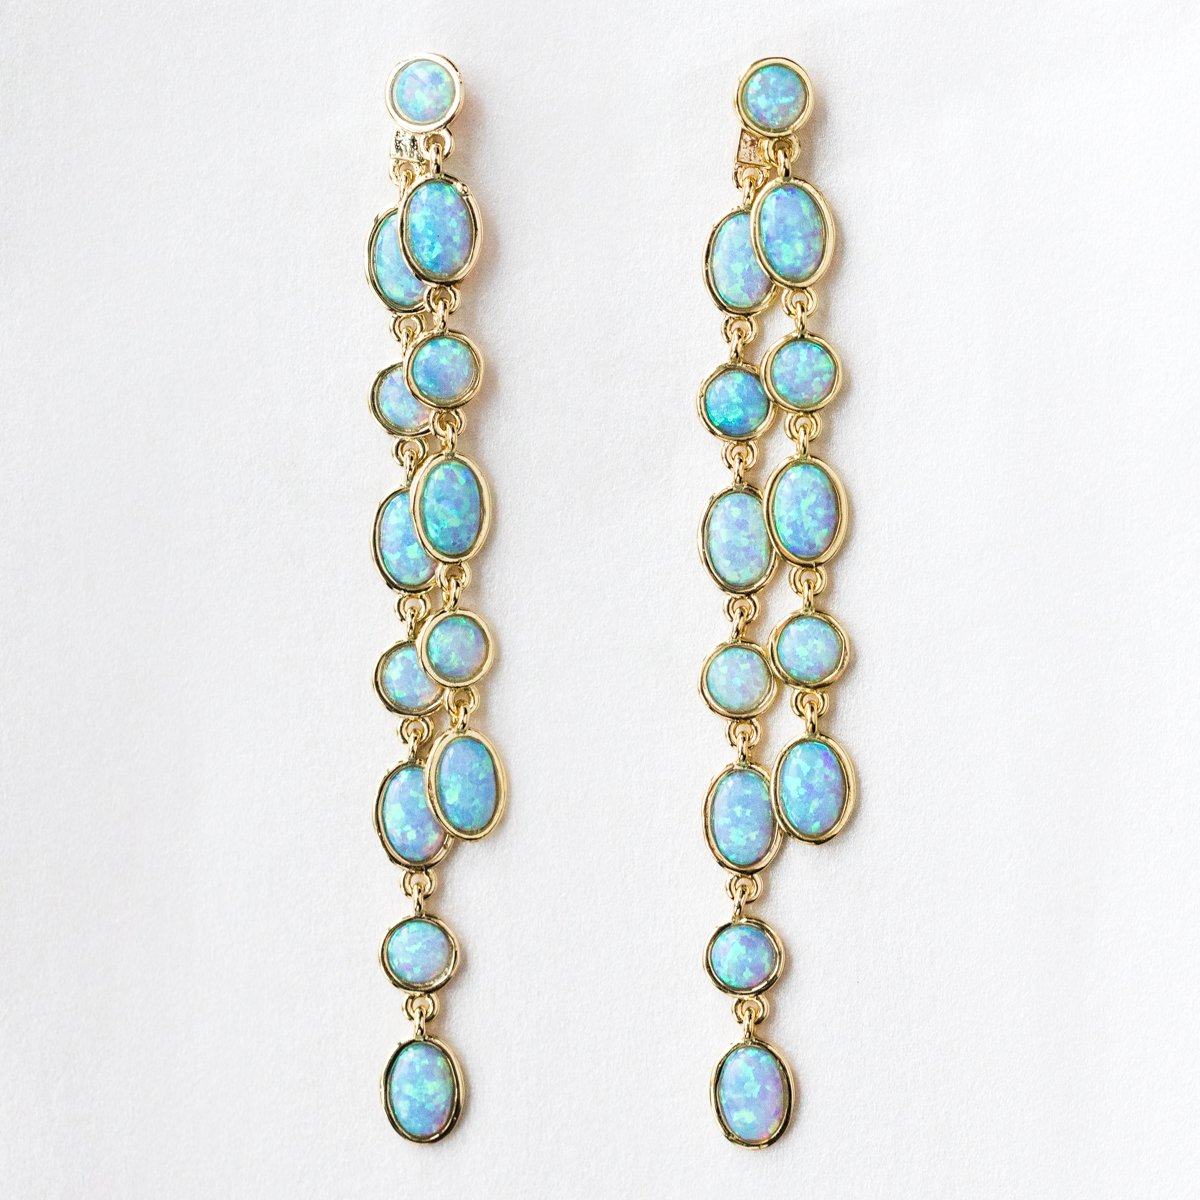 Ellie Earrings in Gold with Opal - earrings - Melinda Maria local eclectic